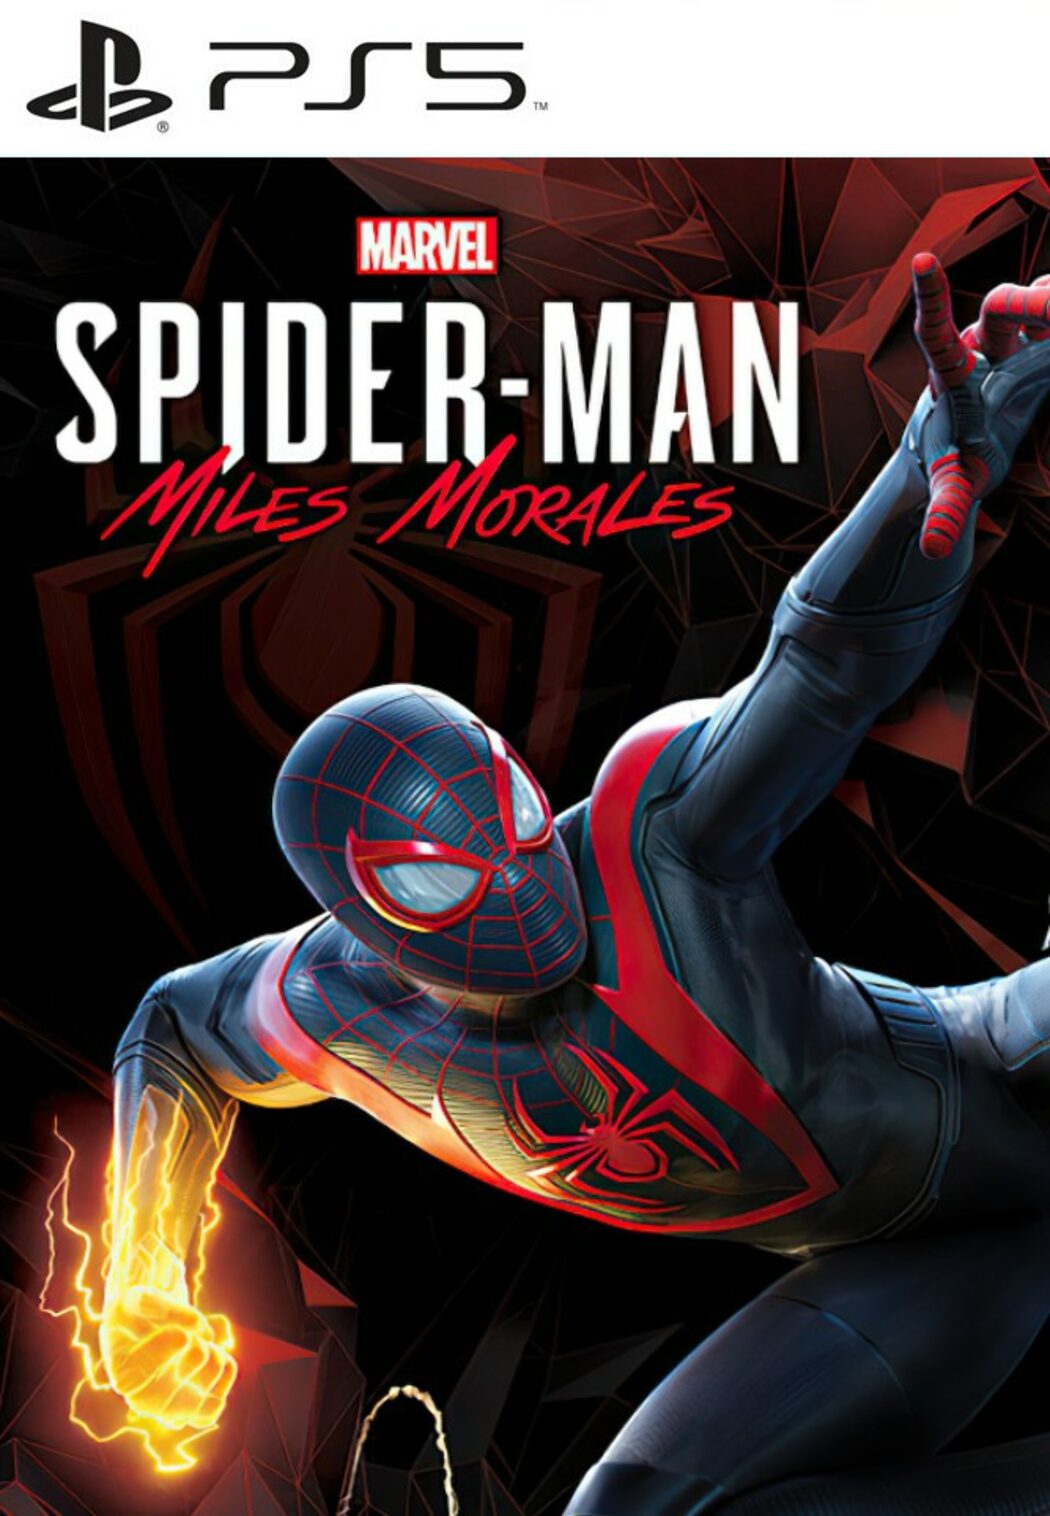 Marvel's Spider-Man: Miles Morales PS5 key | Cheap | ENEBA